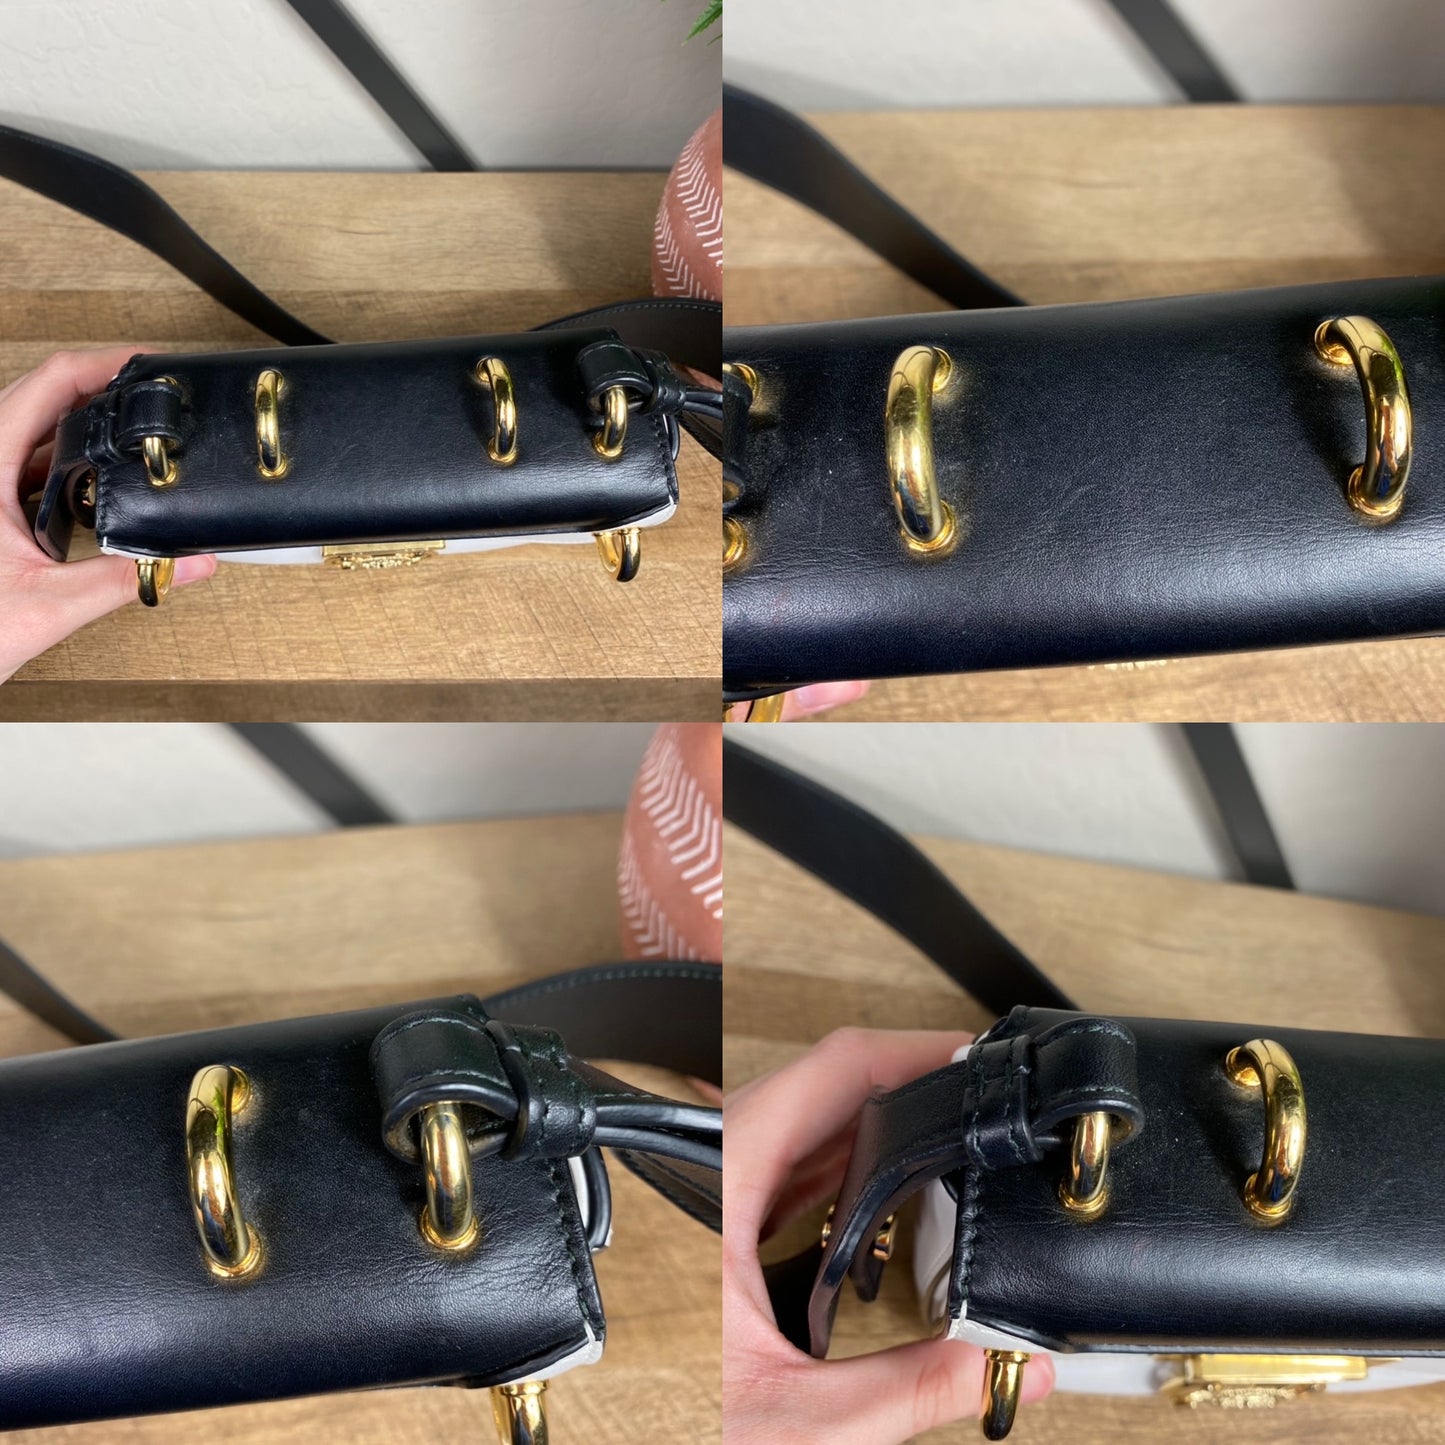 Balmain BBox Leather Crossbody Bag